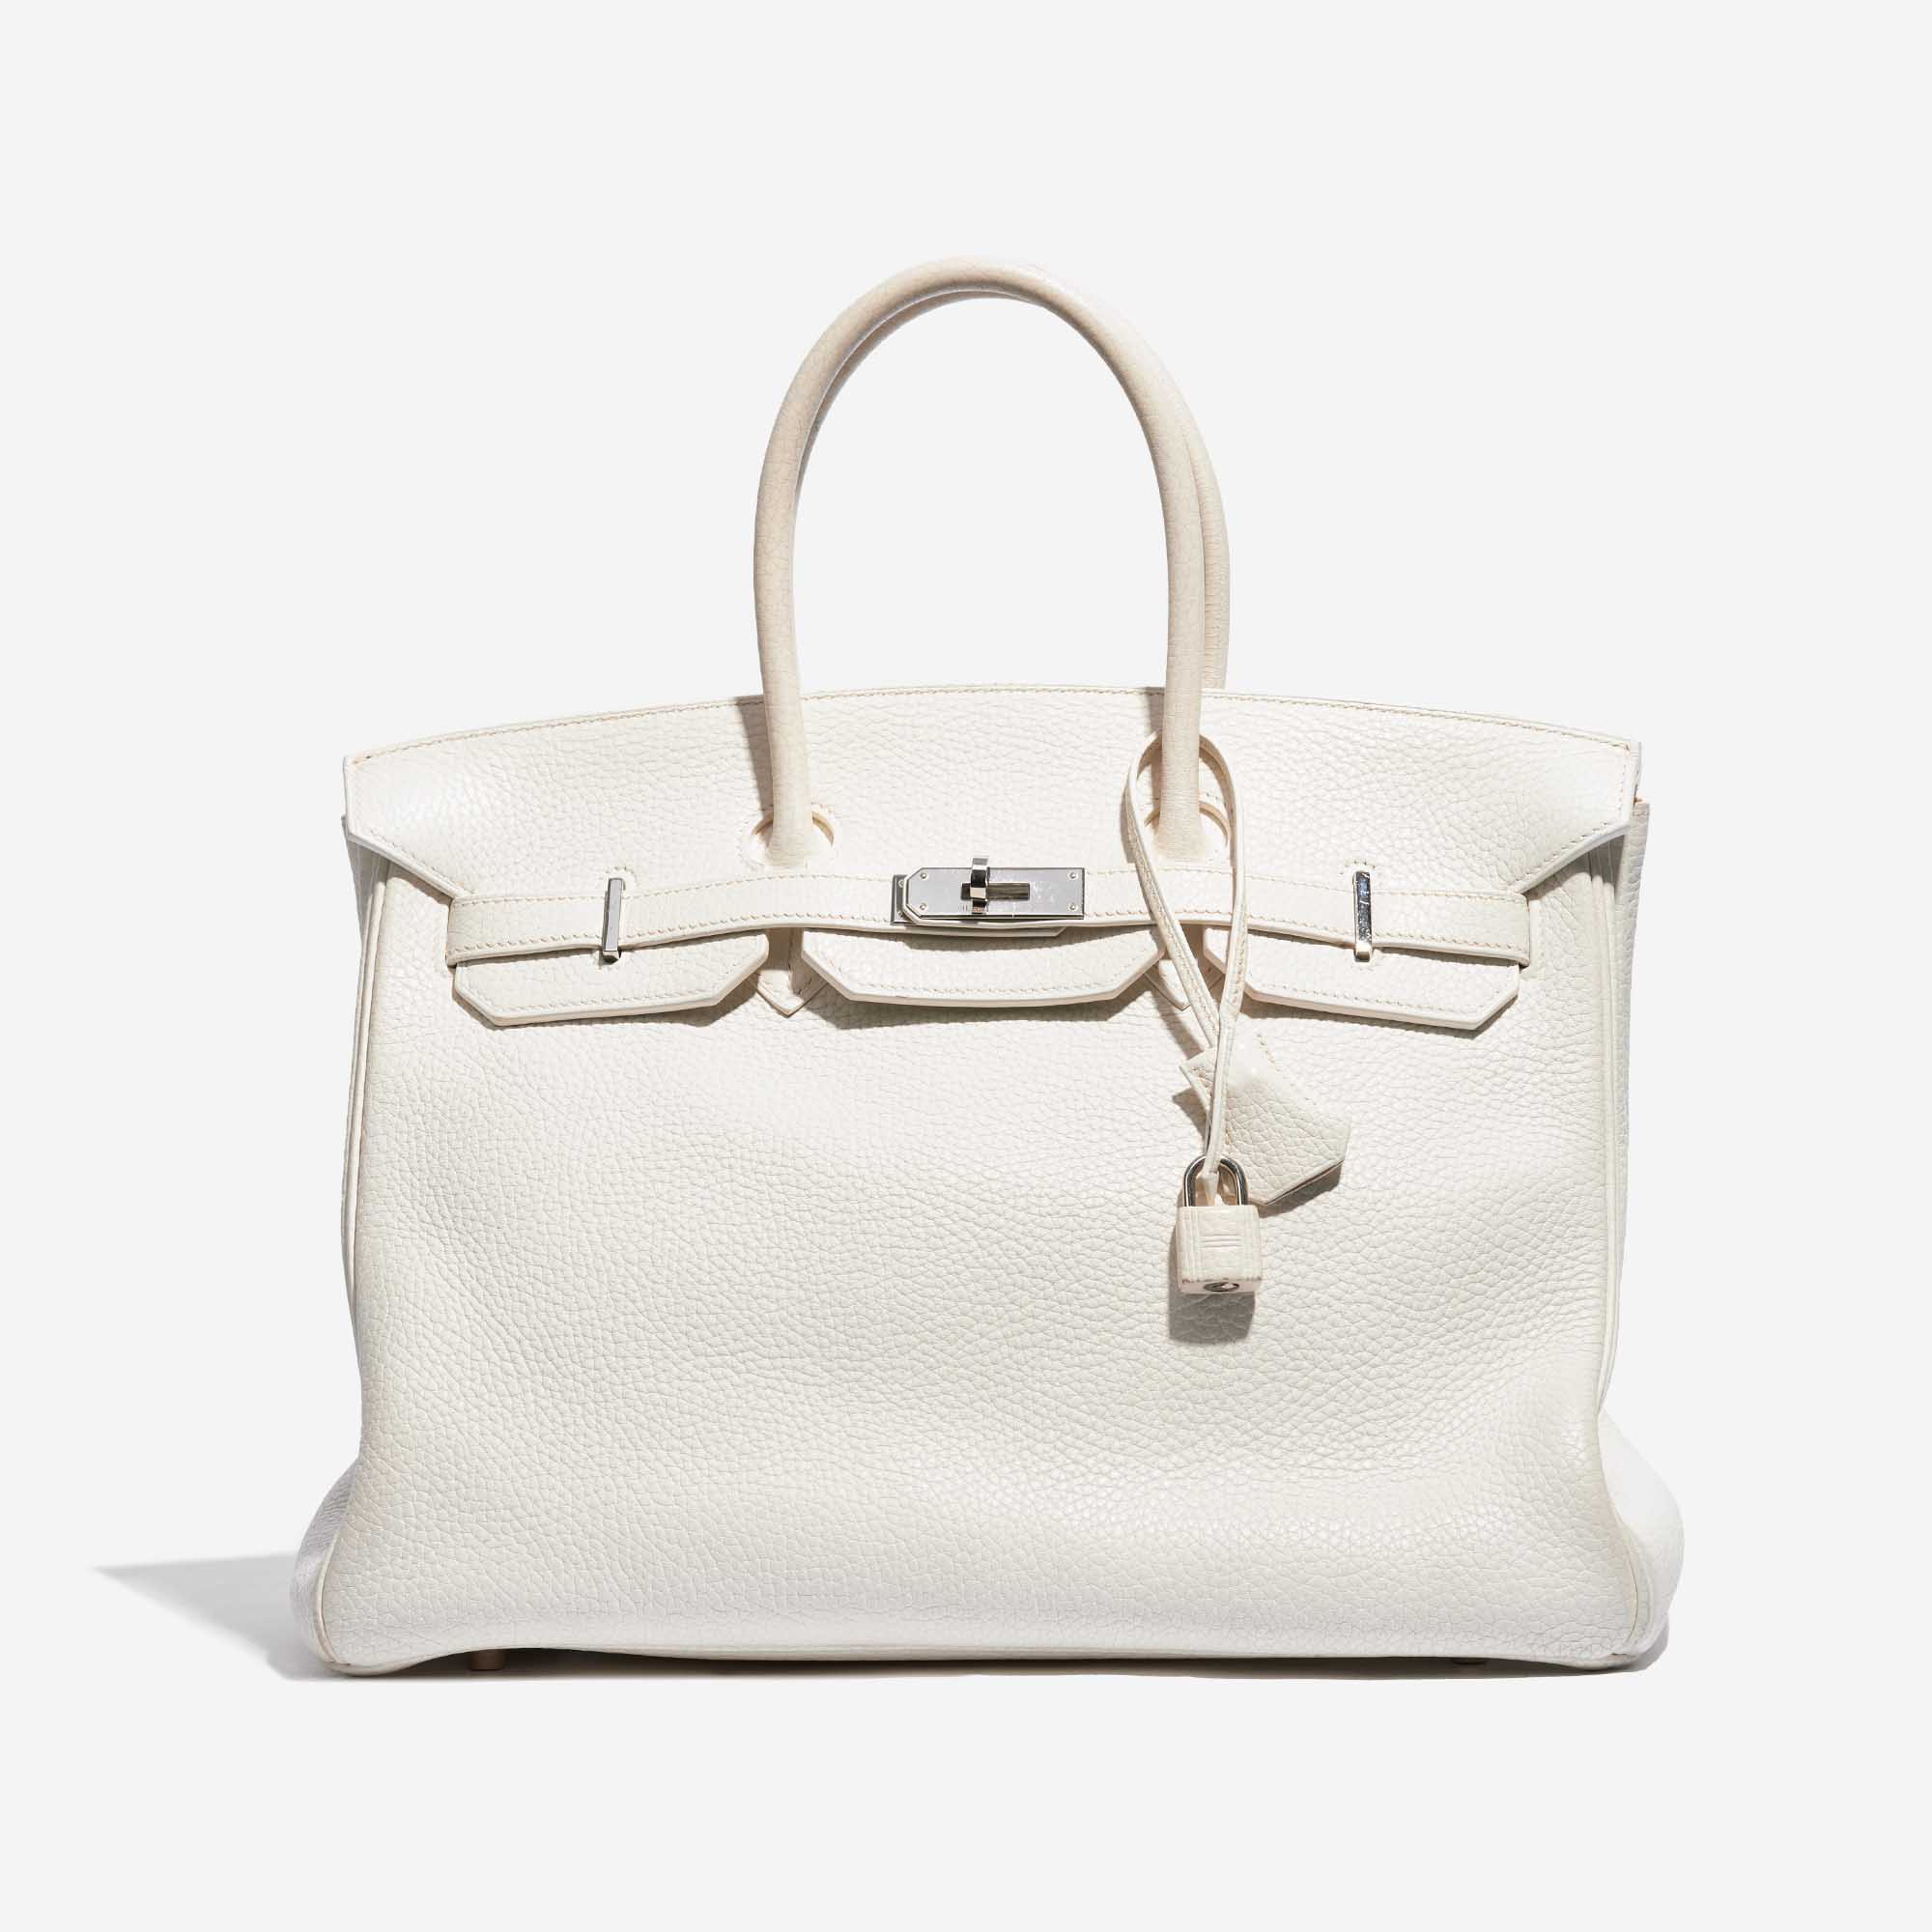 Pre-owned Hermès bag Birkin 35 Clemence White White | Sell your designer bag on Saclab.com